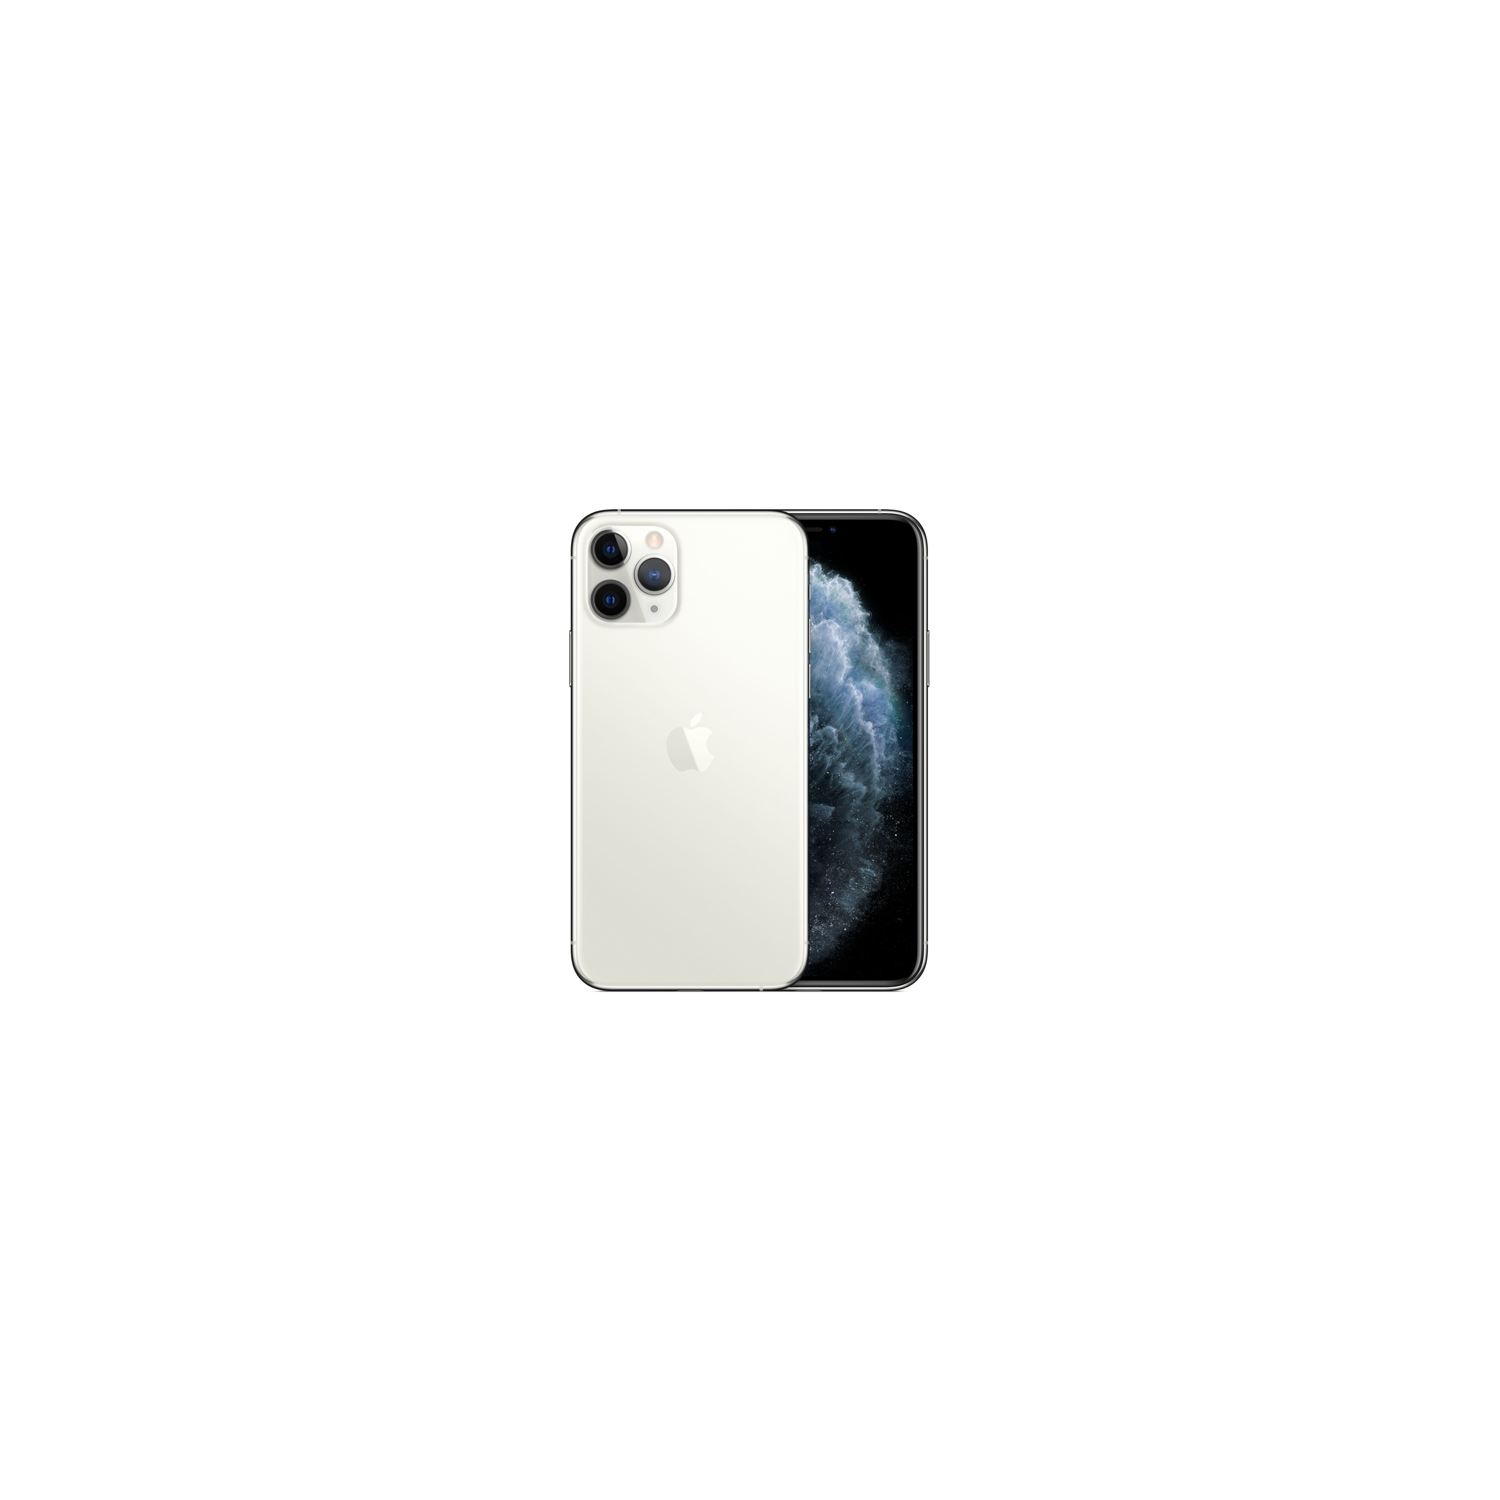 Refurbished (Good) - Apple iPhone 11 Pro Max 256GB Smartphone - Silver - Unlocked